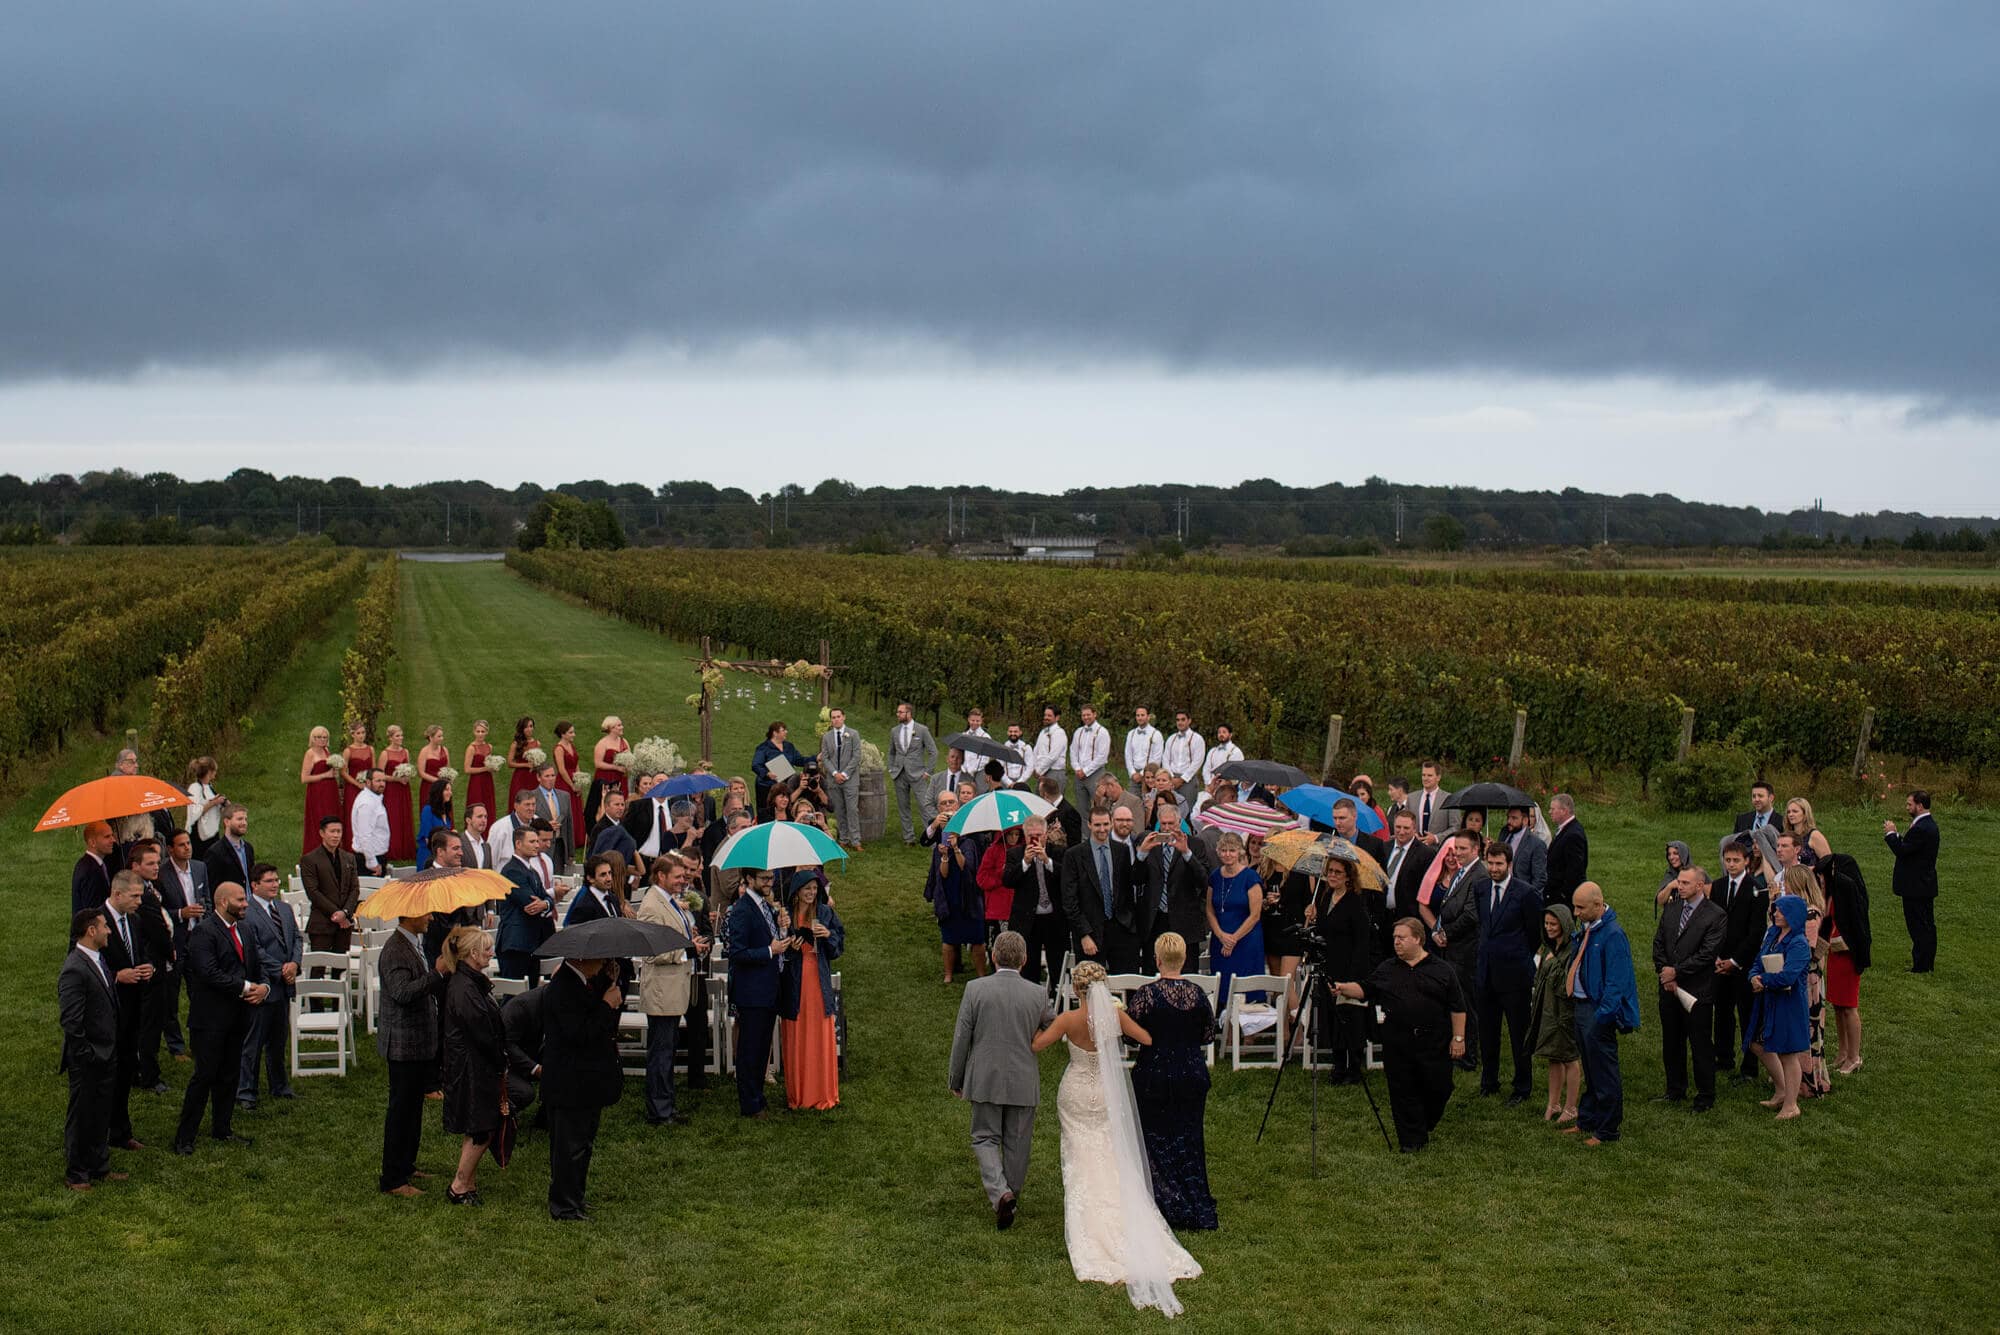 rainy wedding ceremony at saltwater farm vineyard